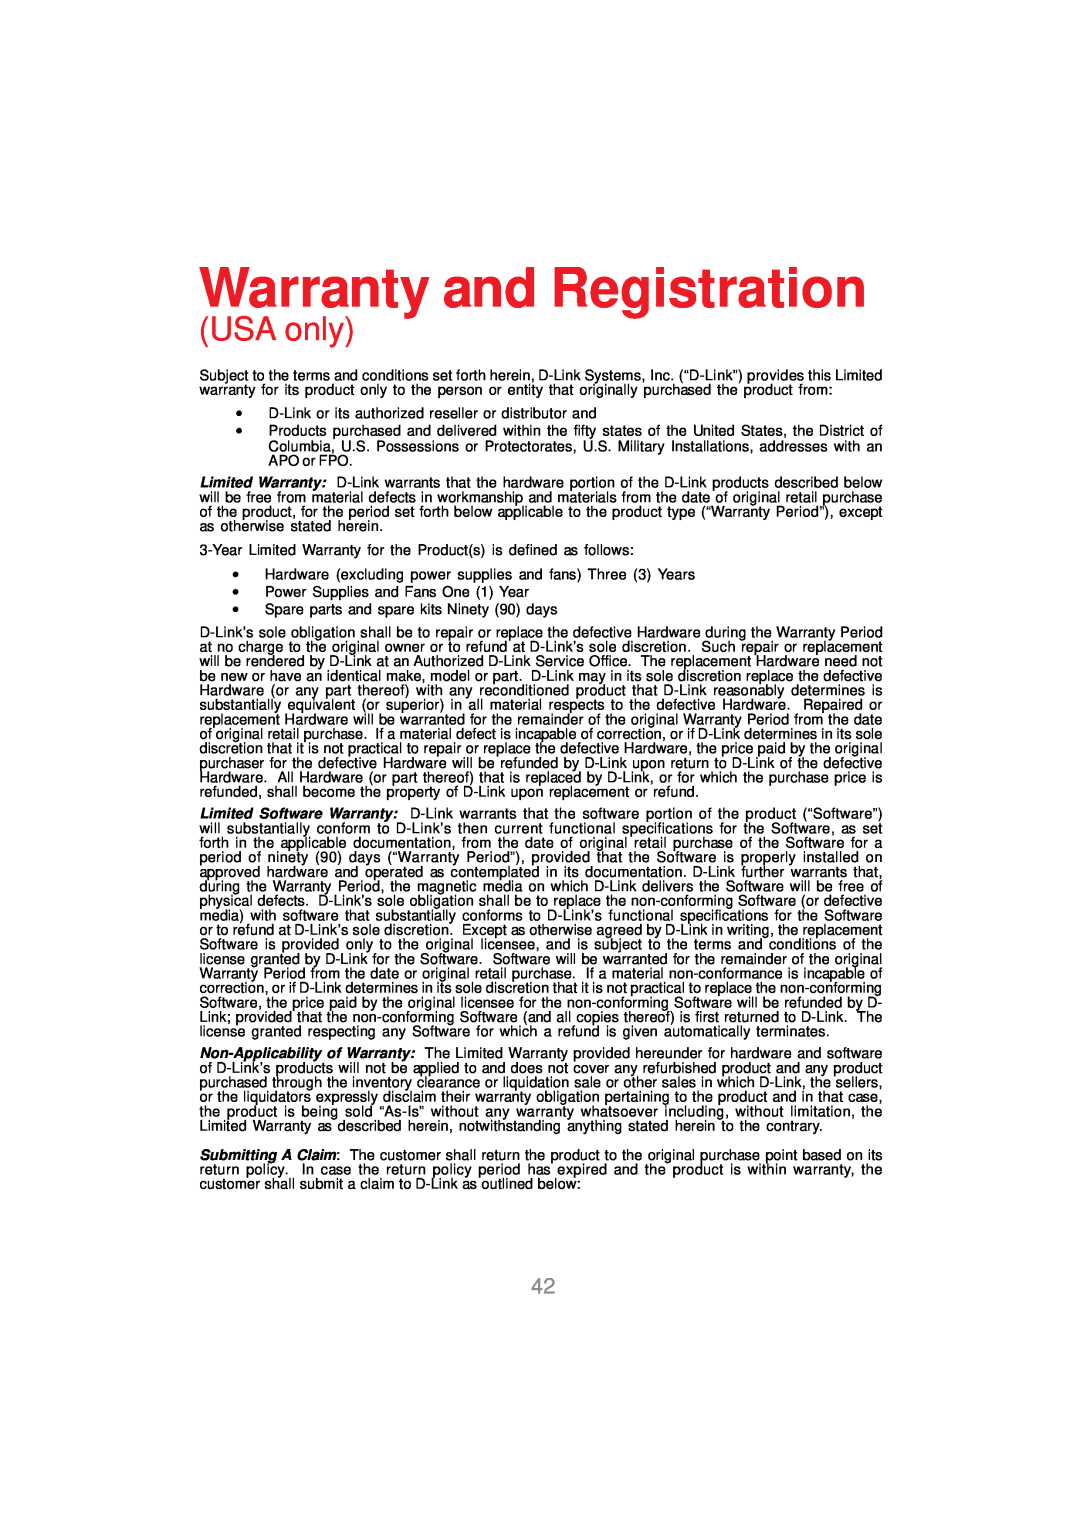 D-Link DWL-AG530 manual Warranty and Registration, USA only 